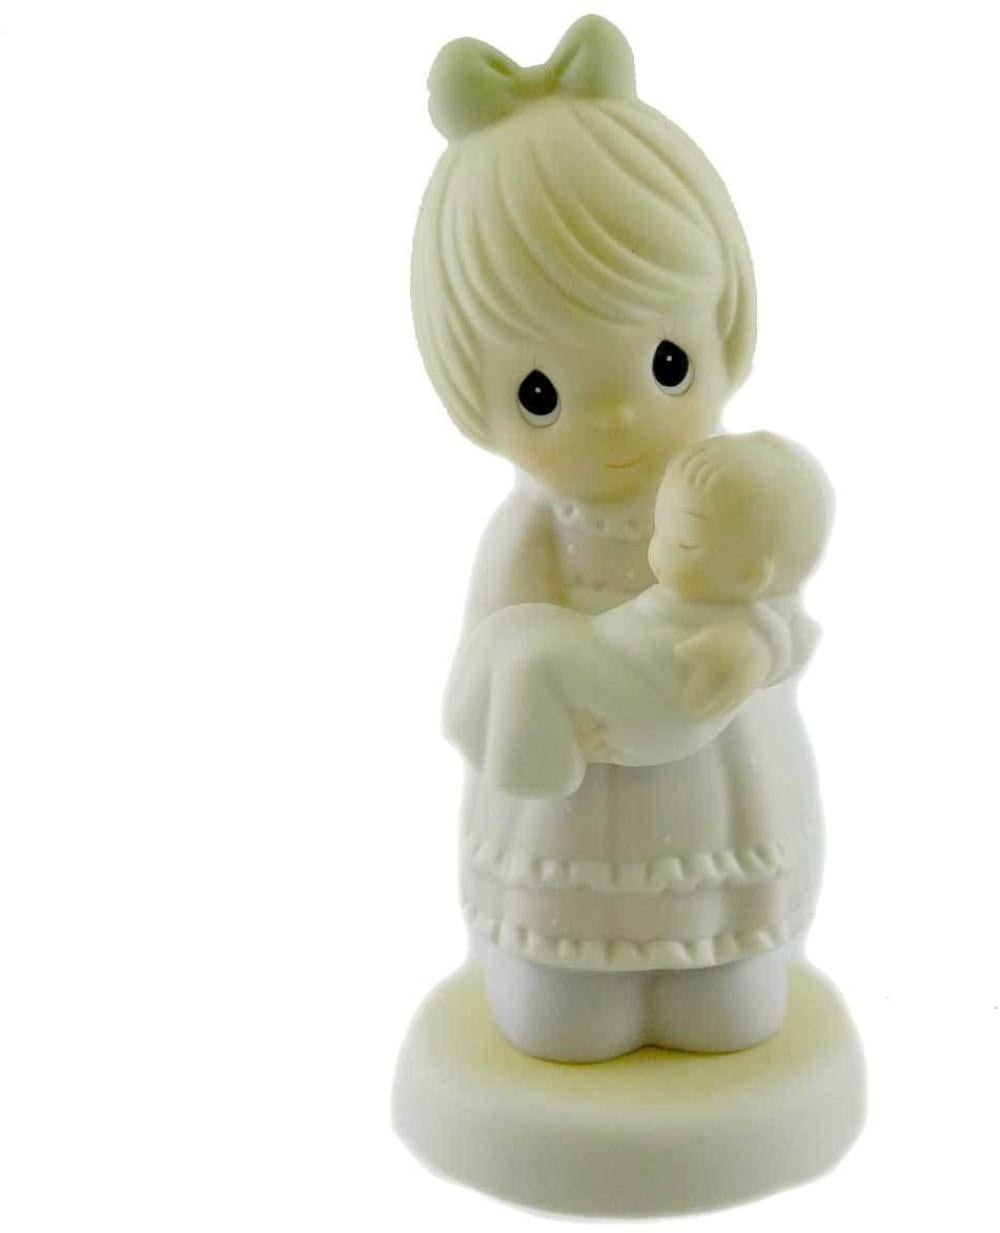 Expecting...LOVE Bisque Porcelain Figurine 940004 Precious Moments